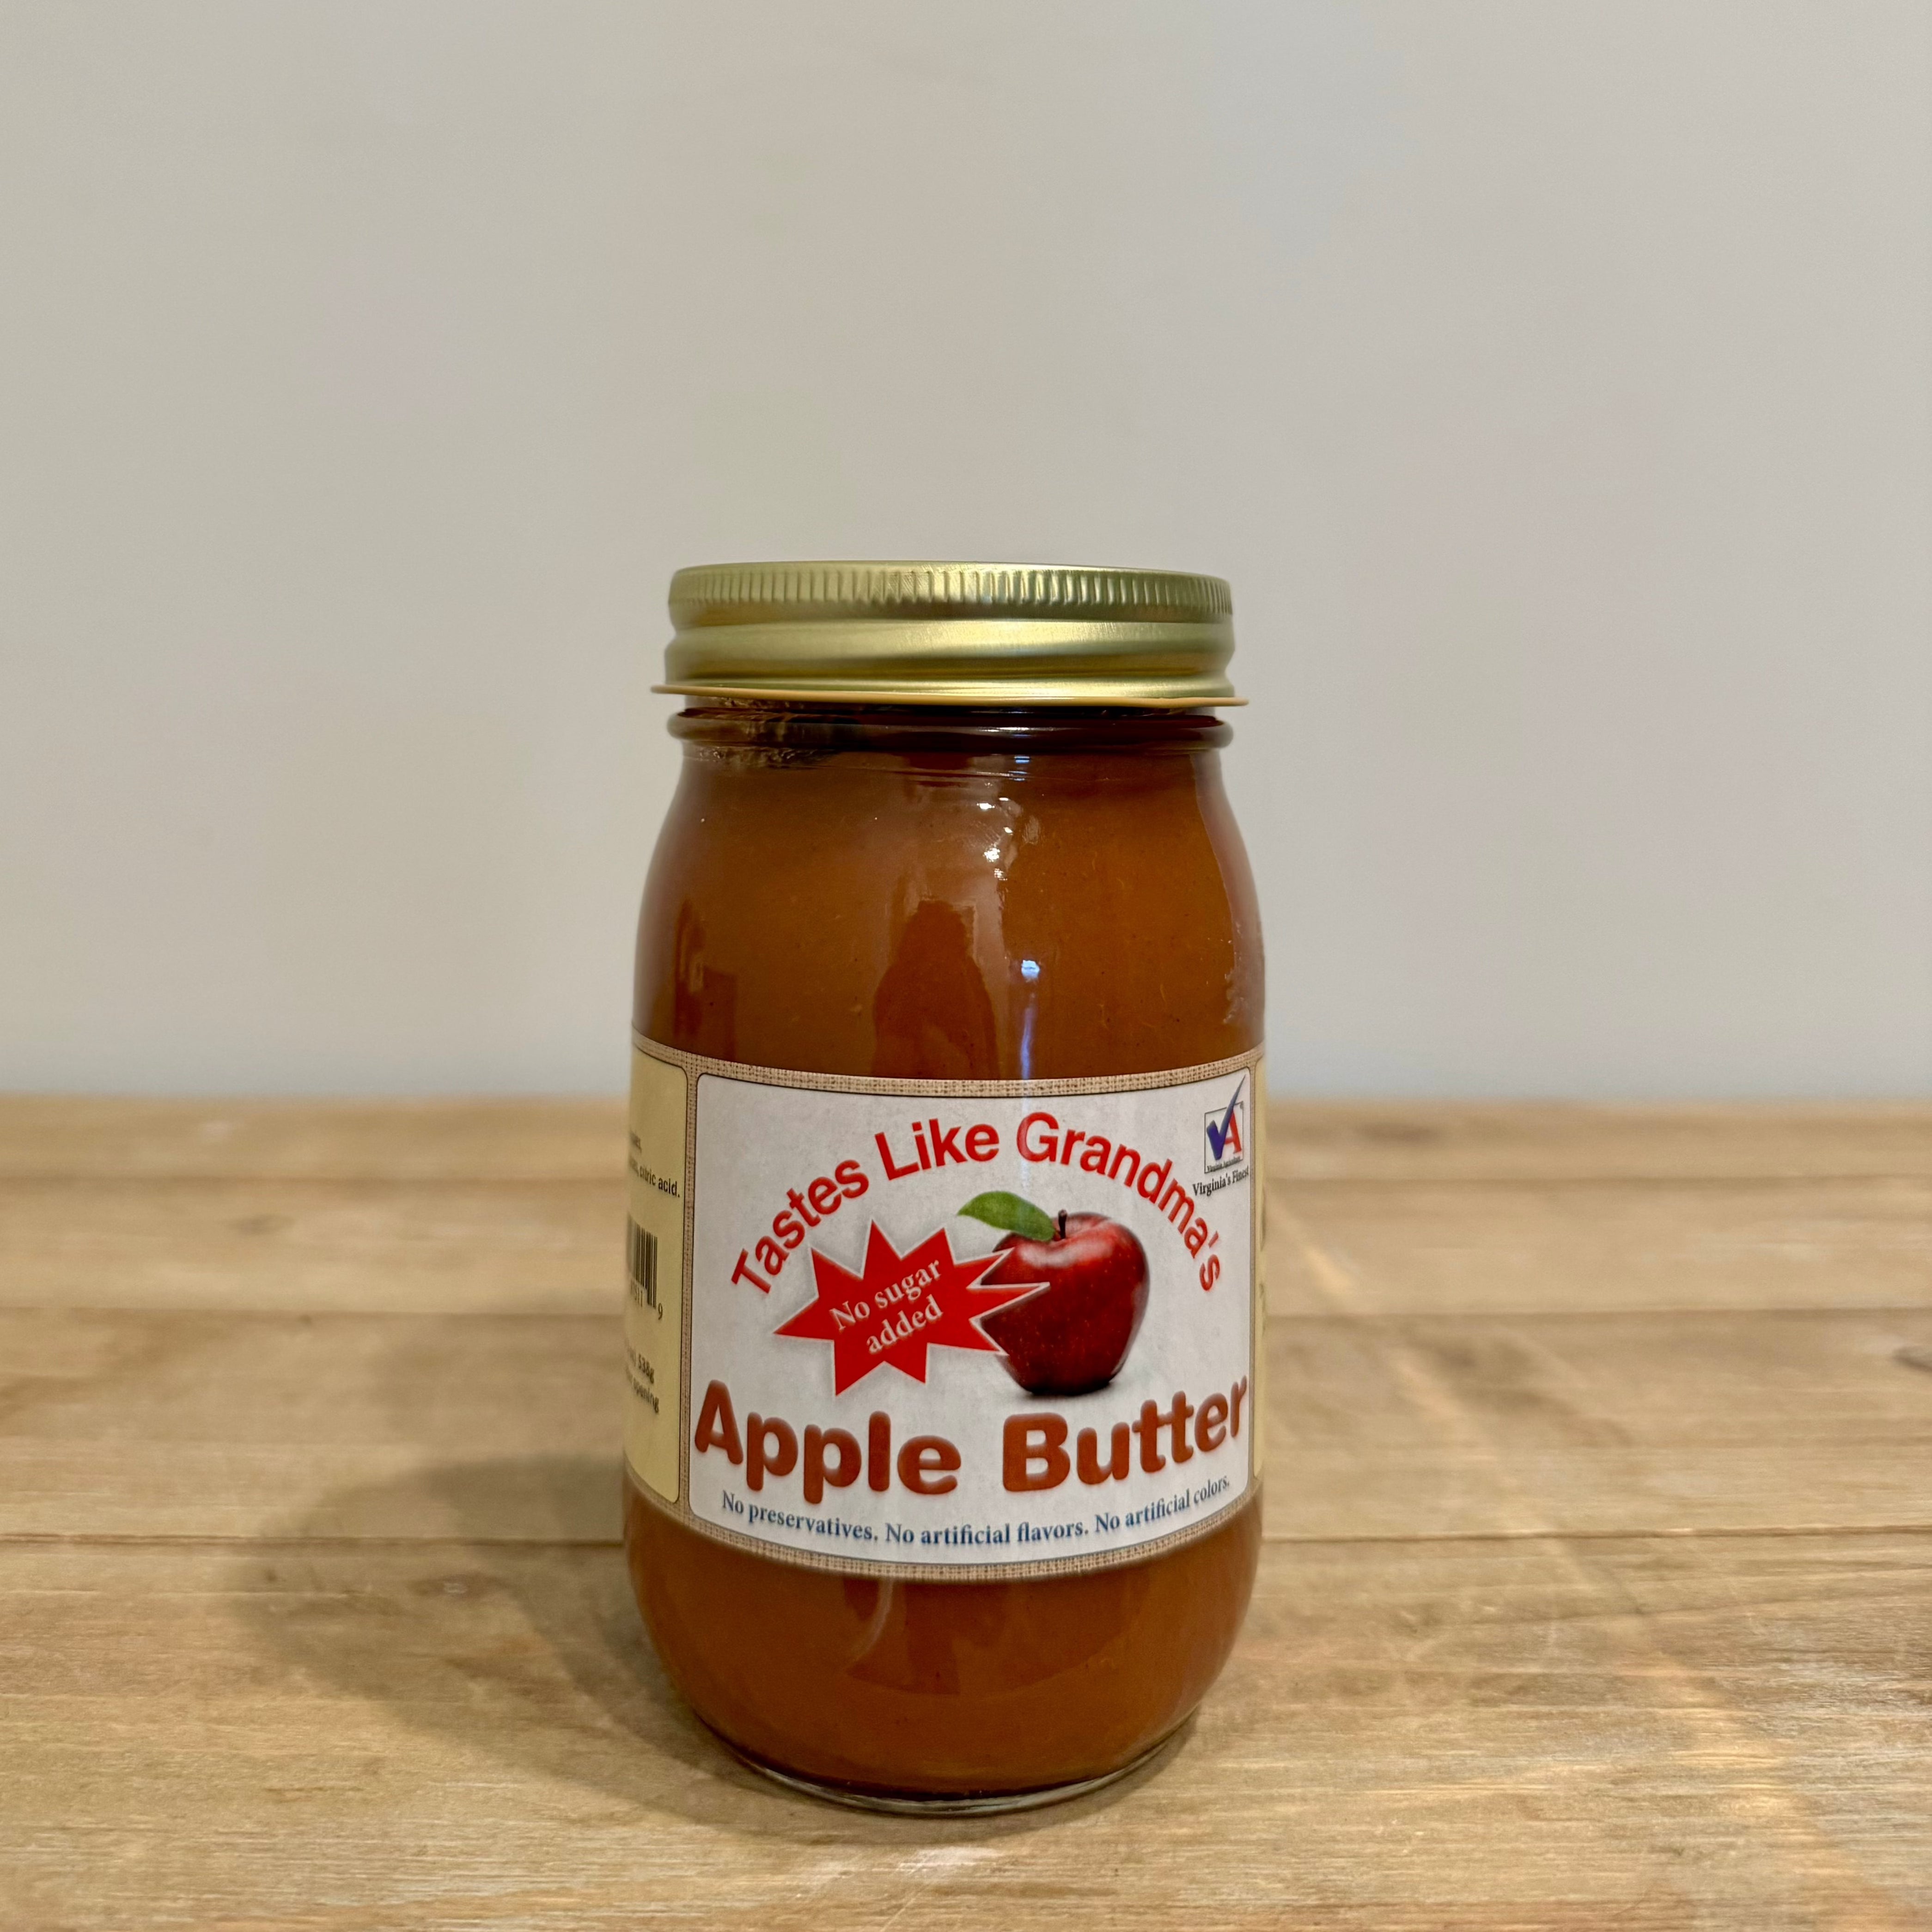 Tastes Like Grandma's Apple Butter no sugar added.